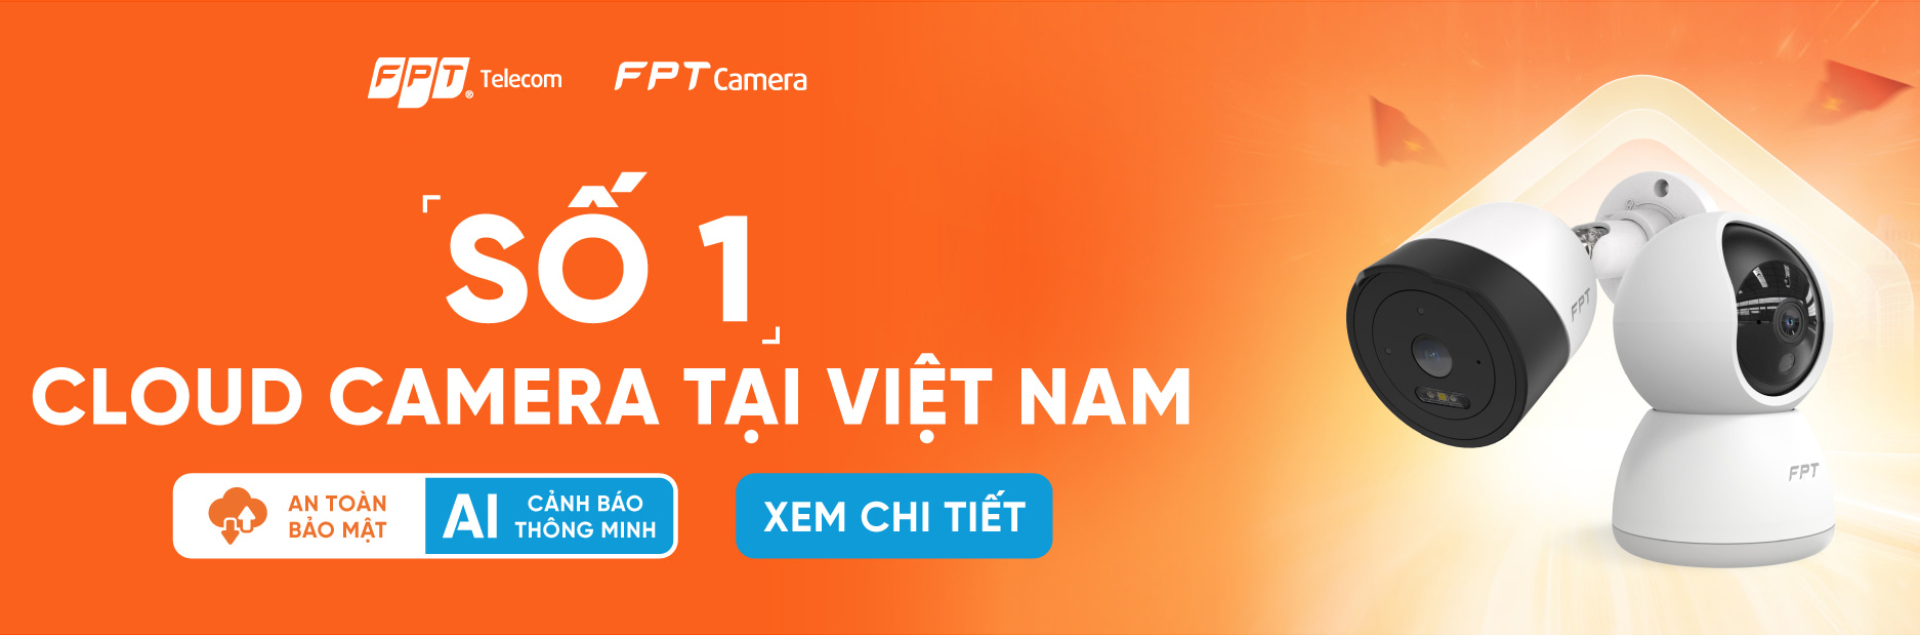 Số 1 cloud camera tại Việt Nam